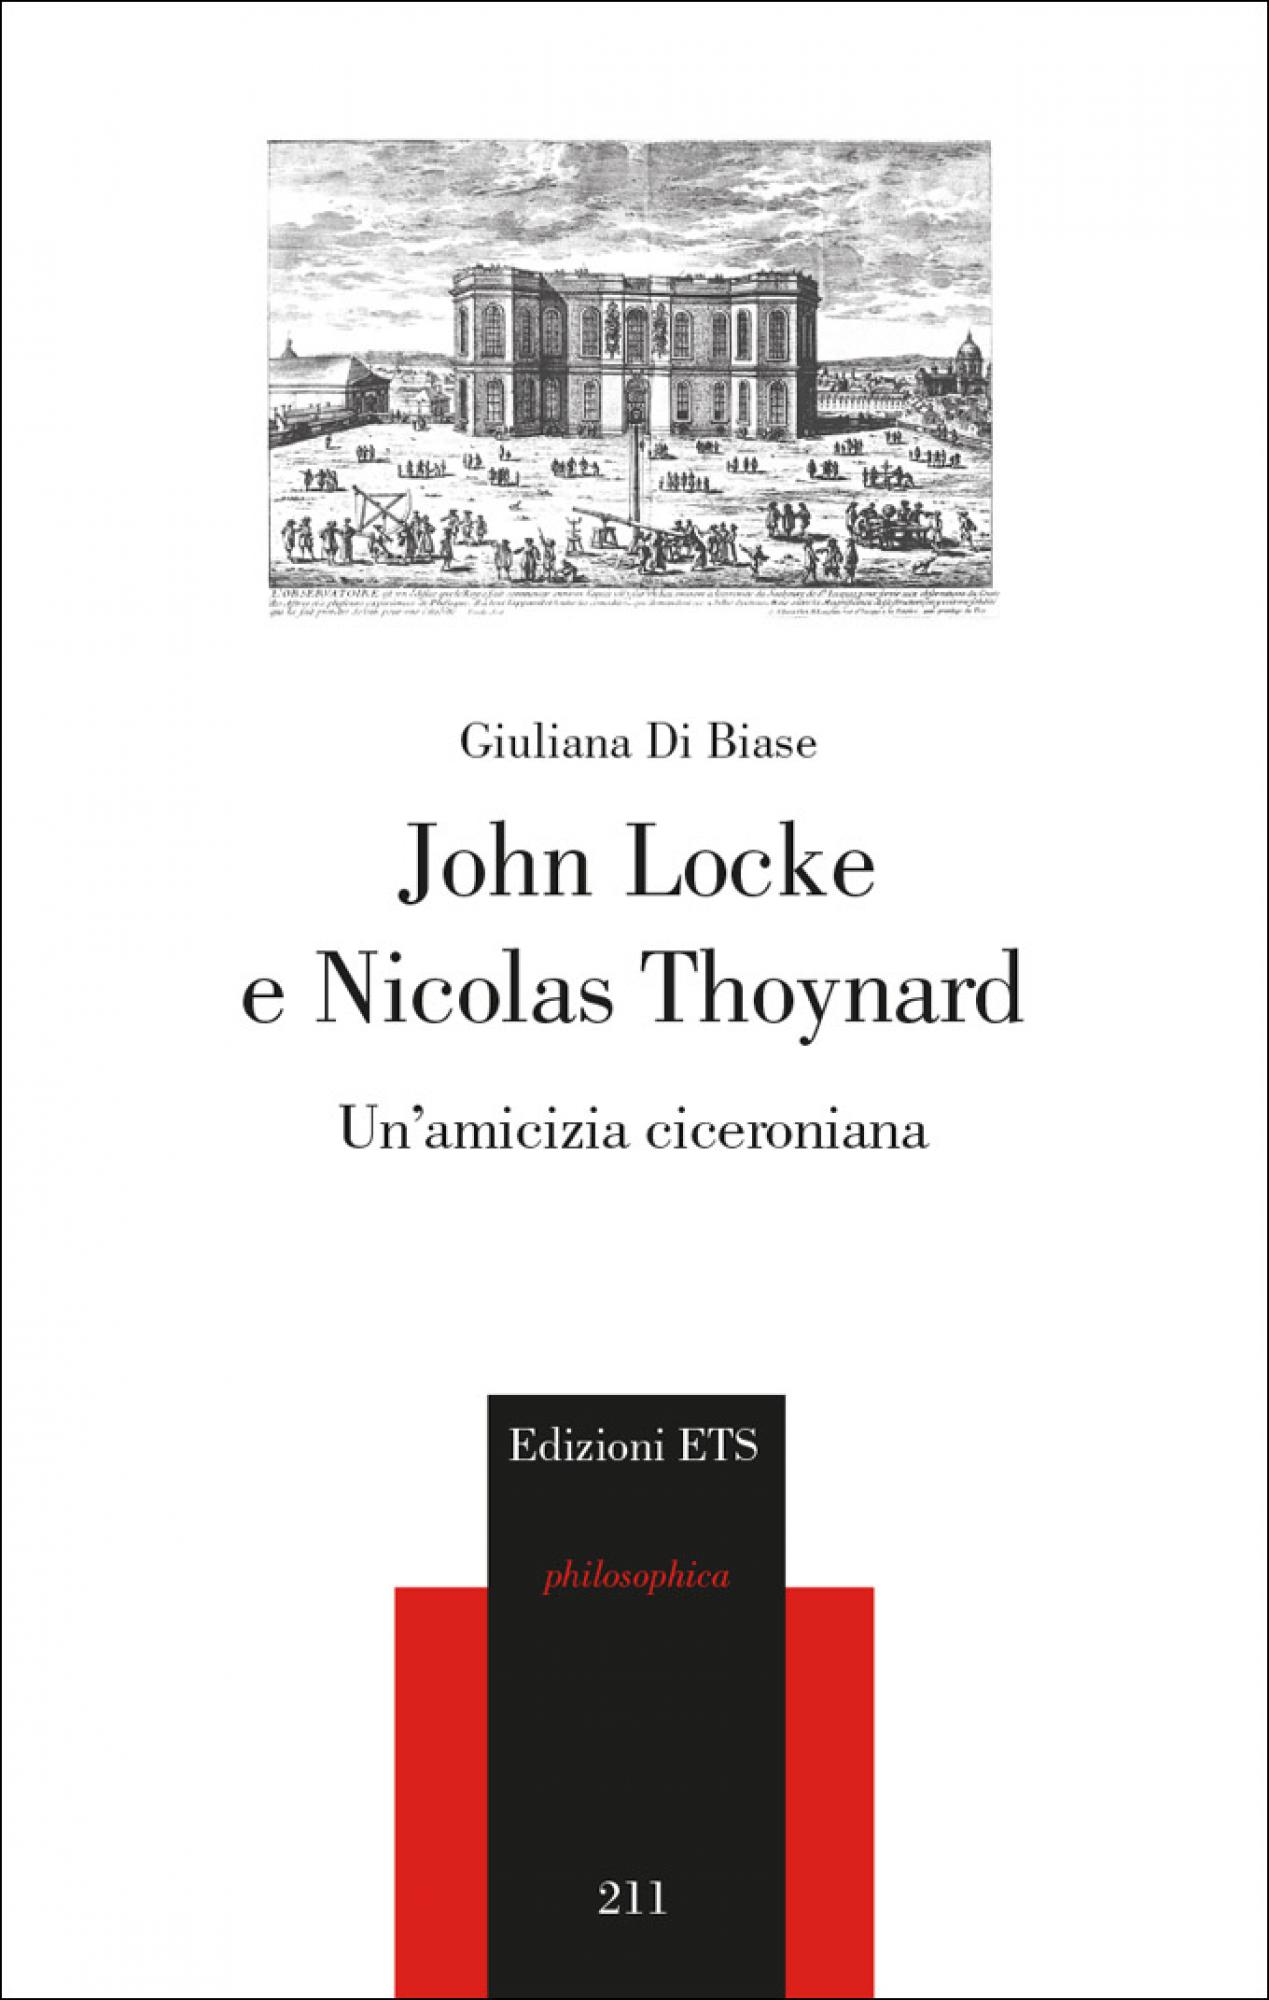 John Locke<br /> e Nicolas Thoynard.Un’amicizia ciceroniana